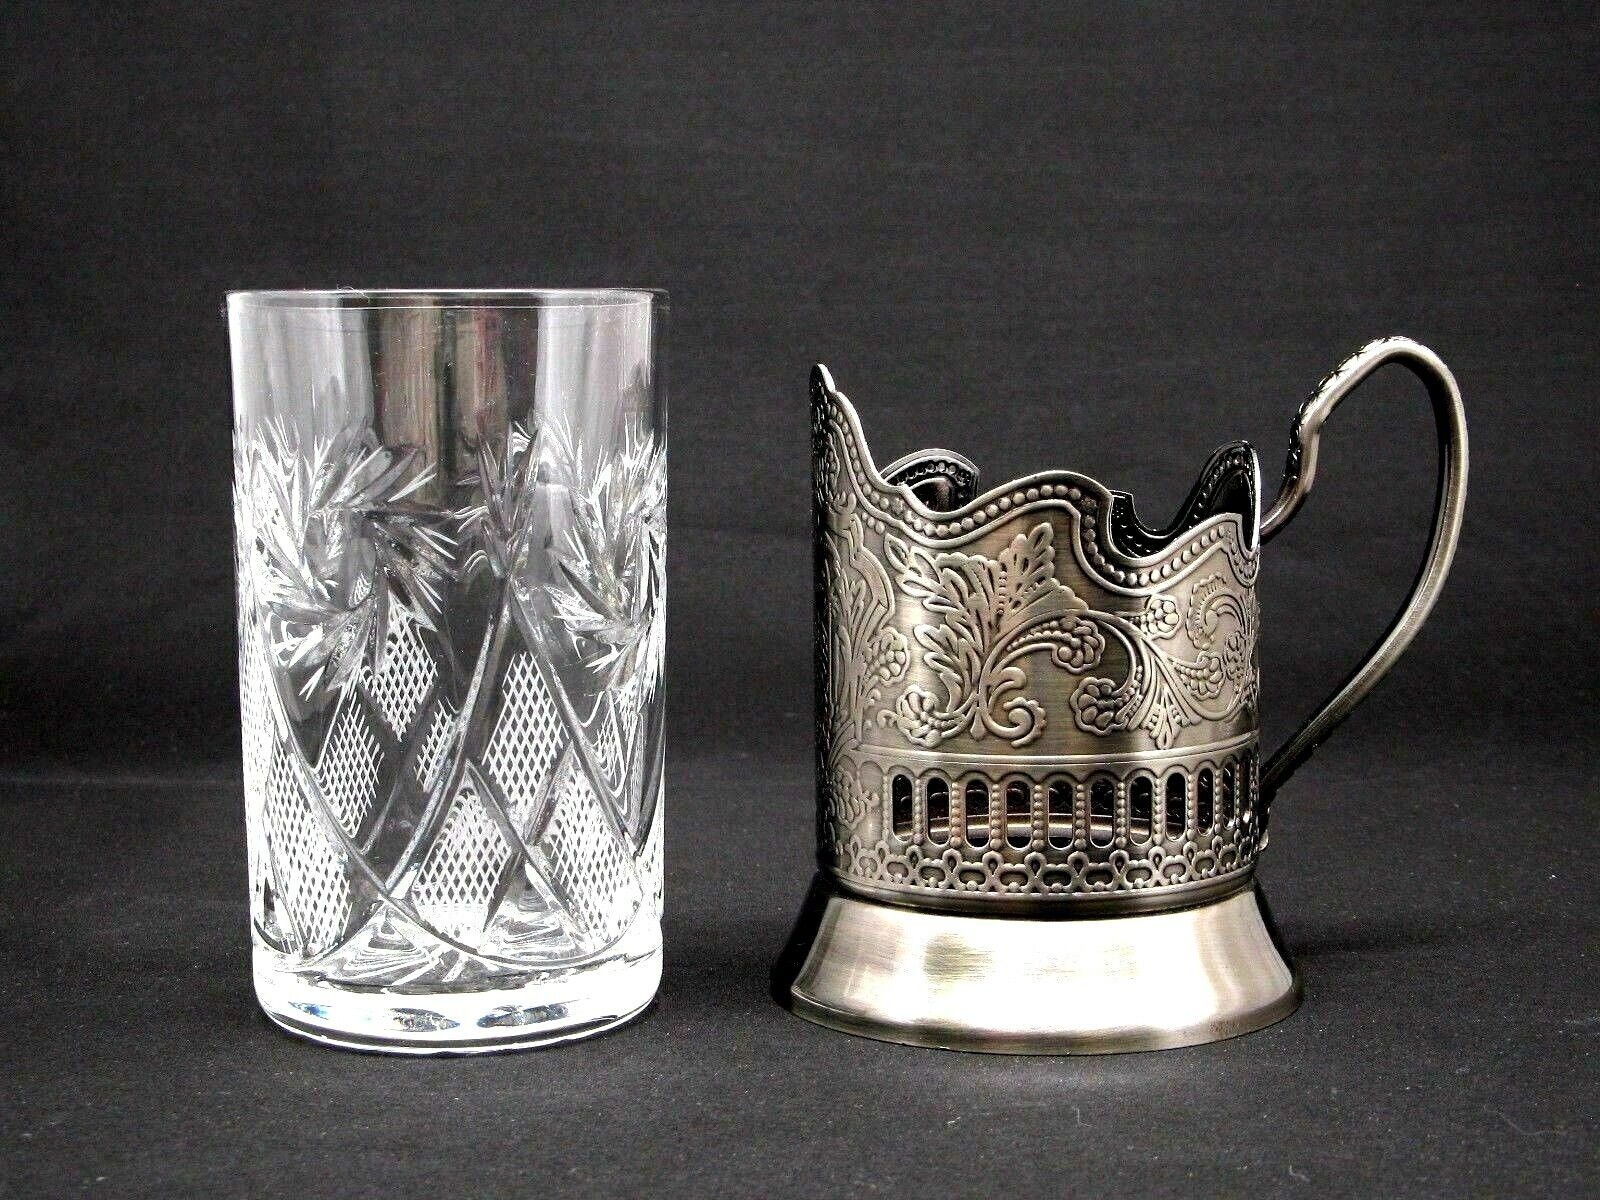 Russian Tea Glass Holder Podstakannik with 8.5 oz Soviet Cut Crystal Glassware